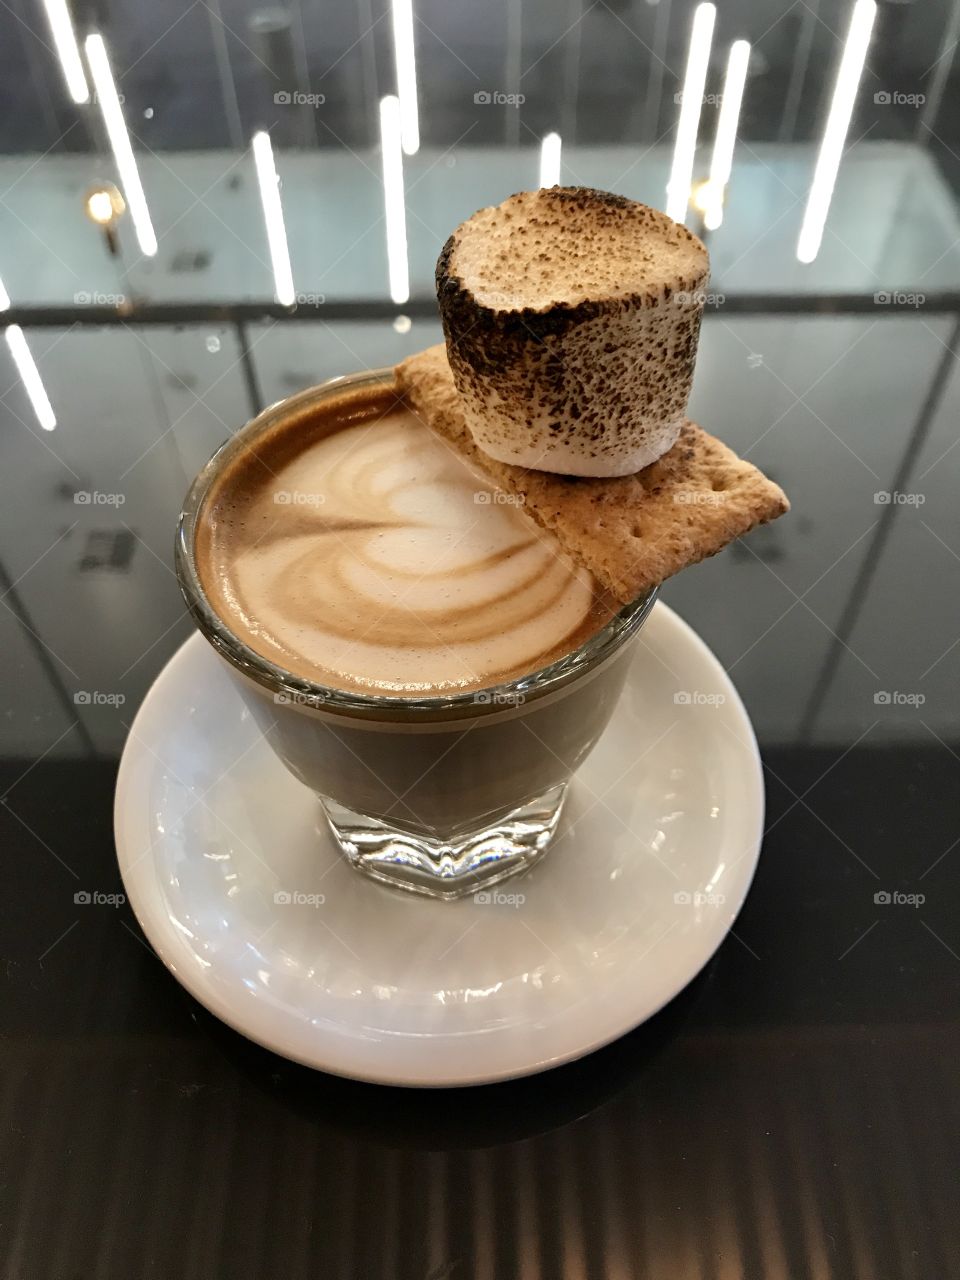 S’more latte